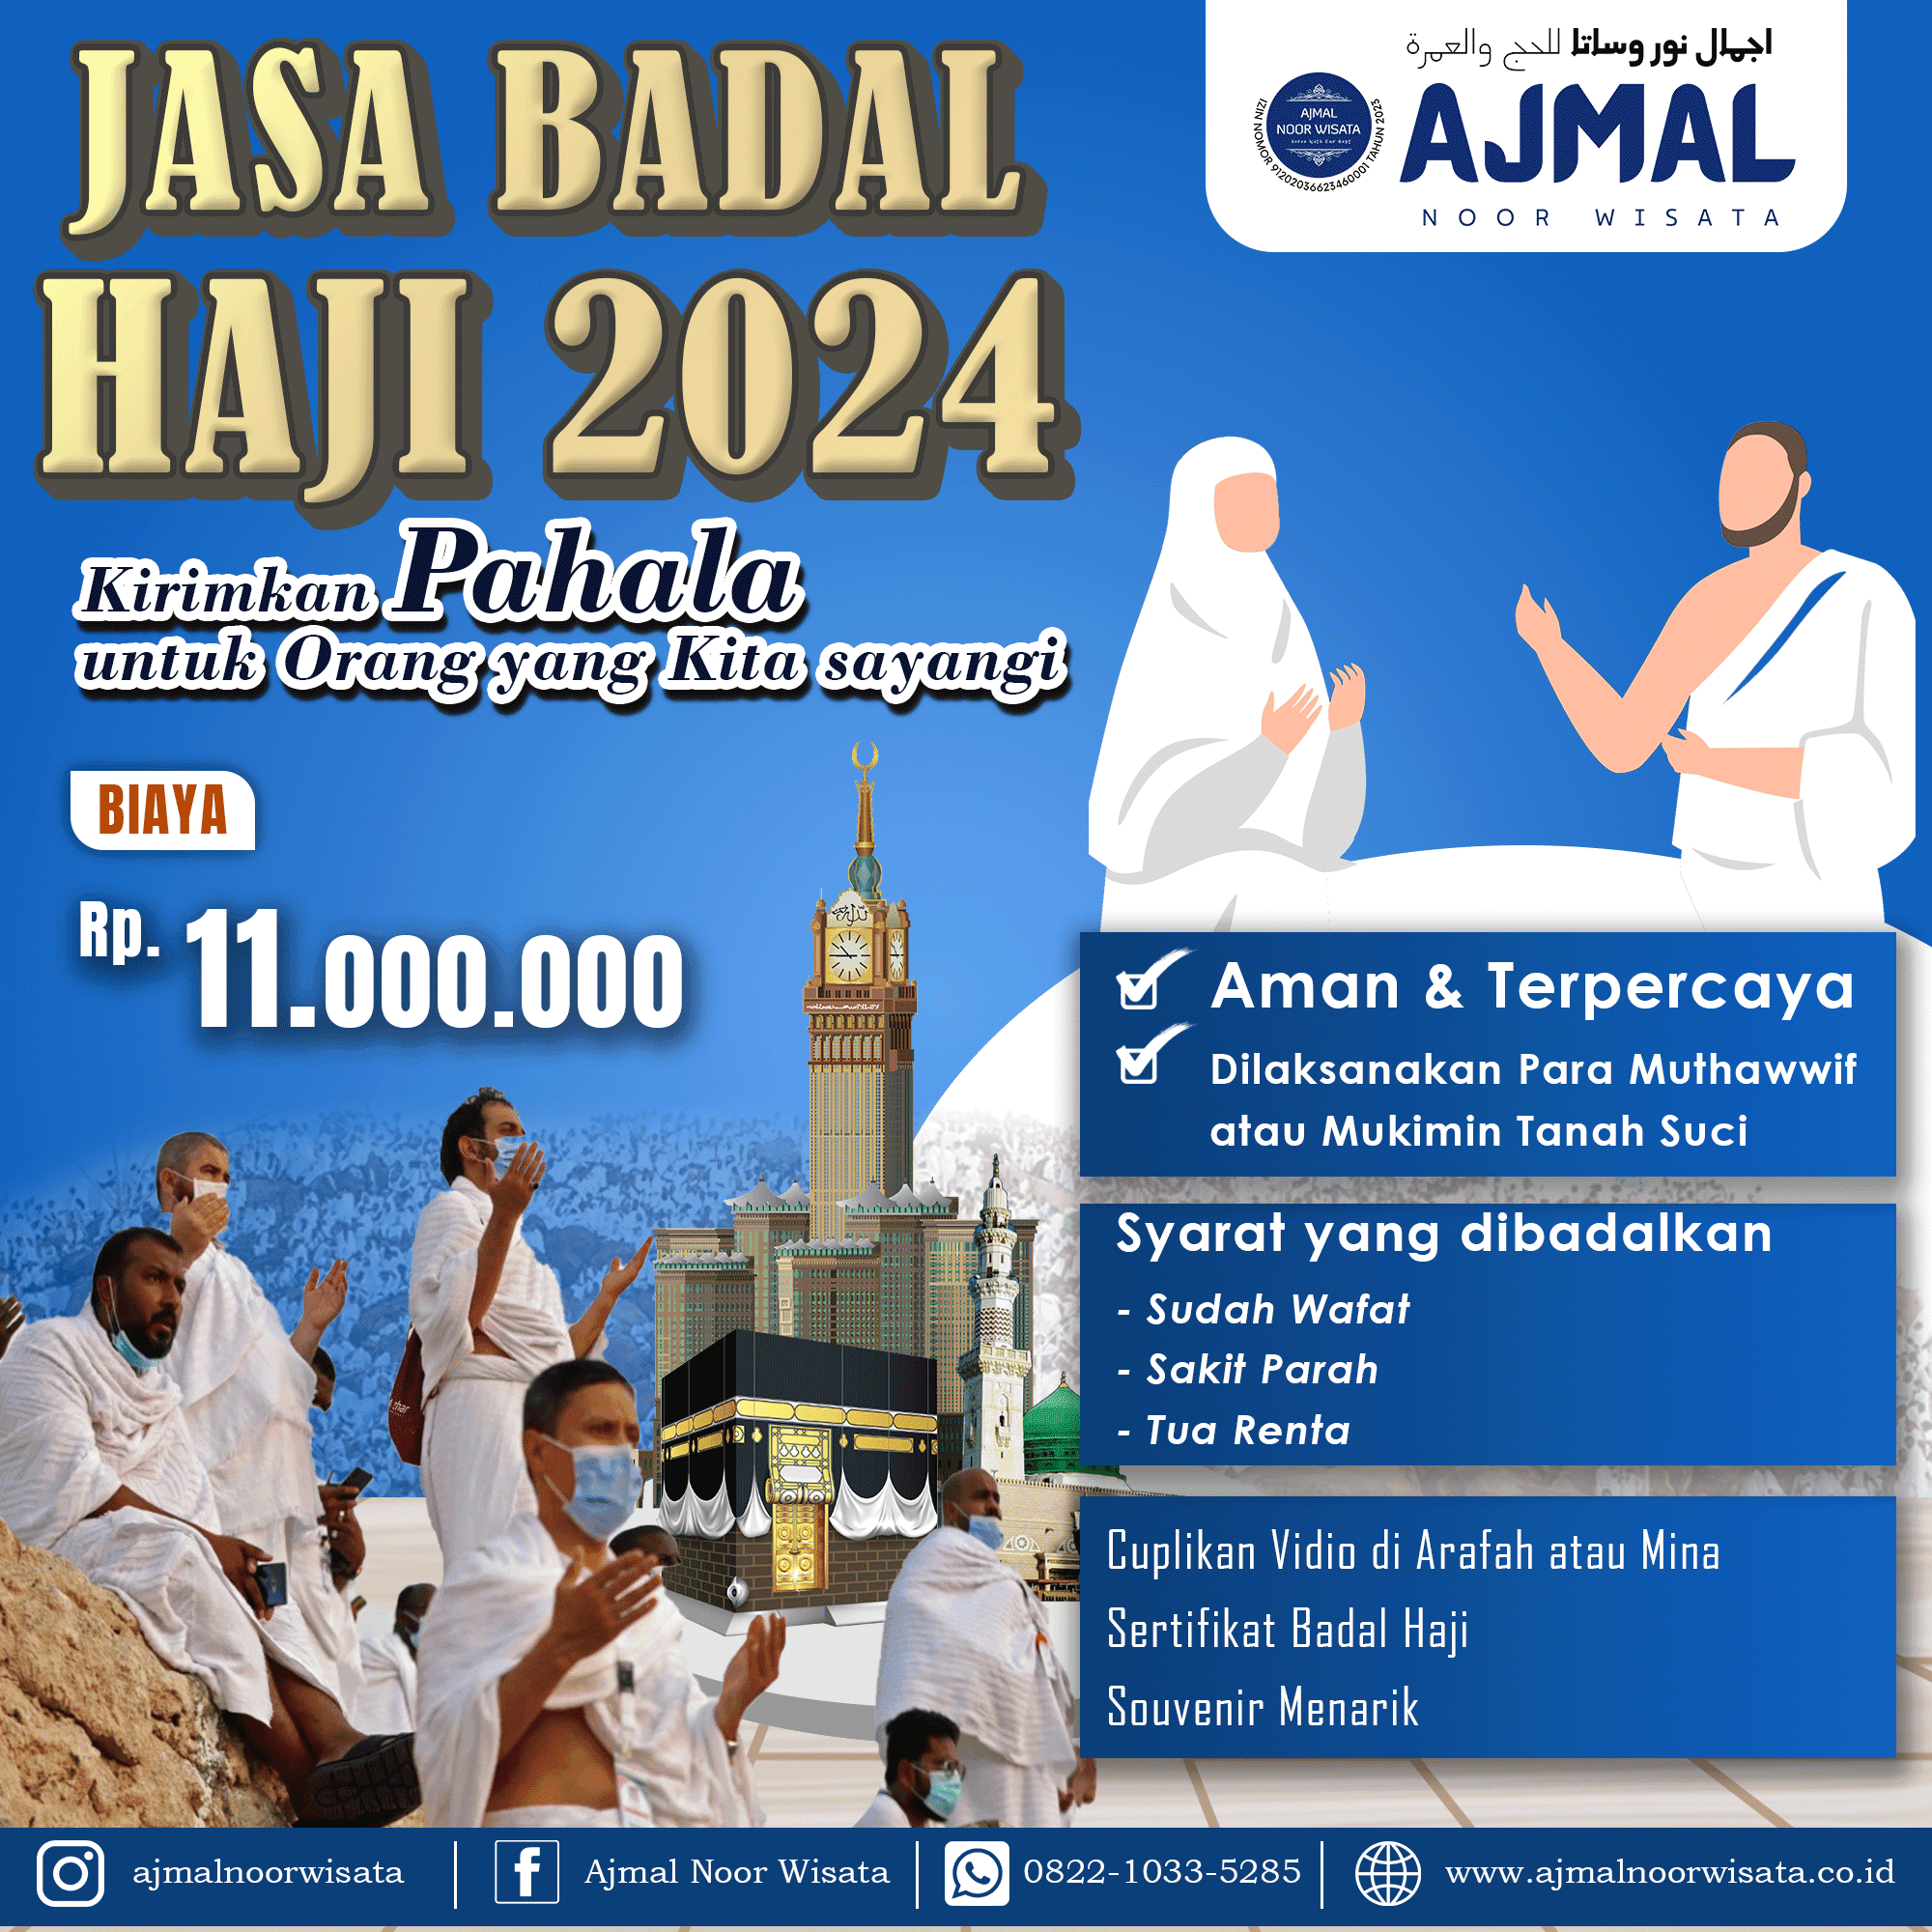 Biaya Badal Haji 2024